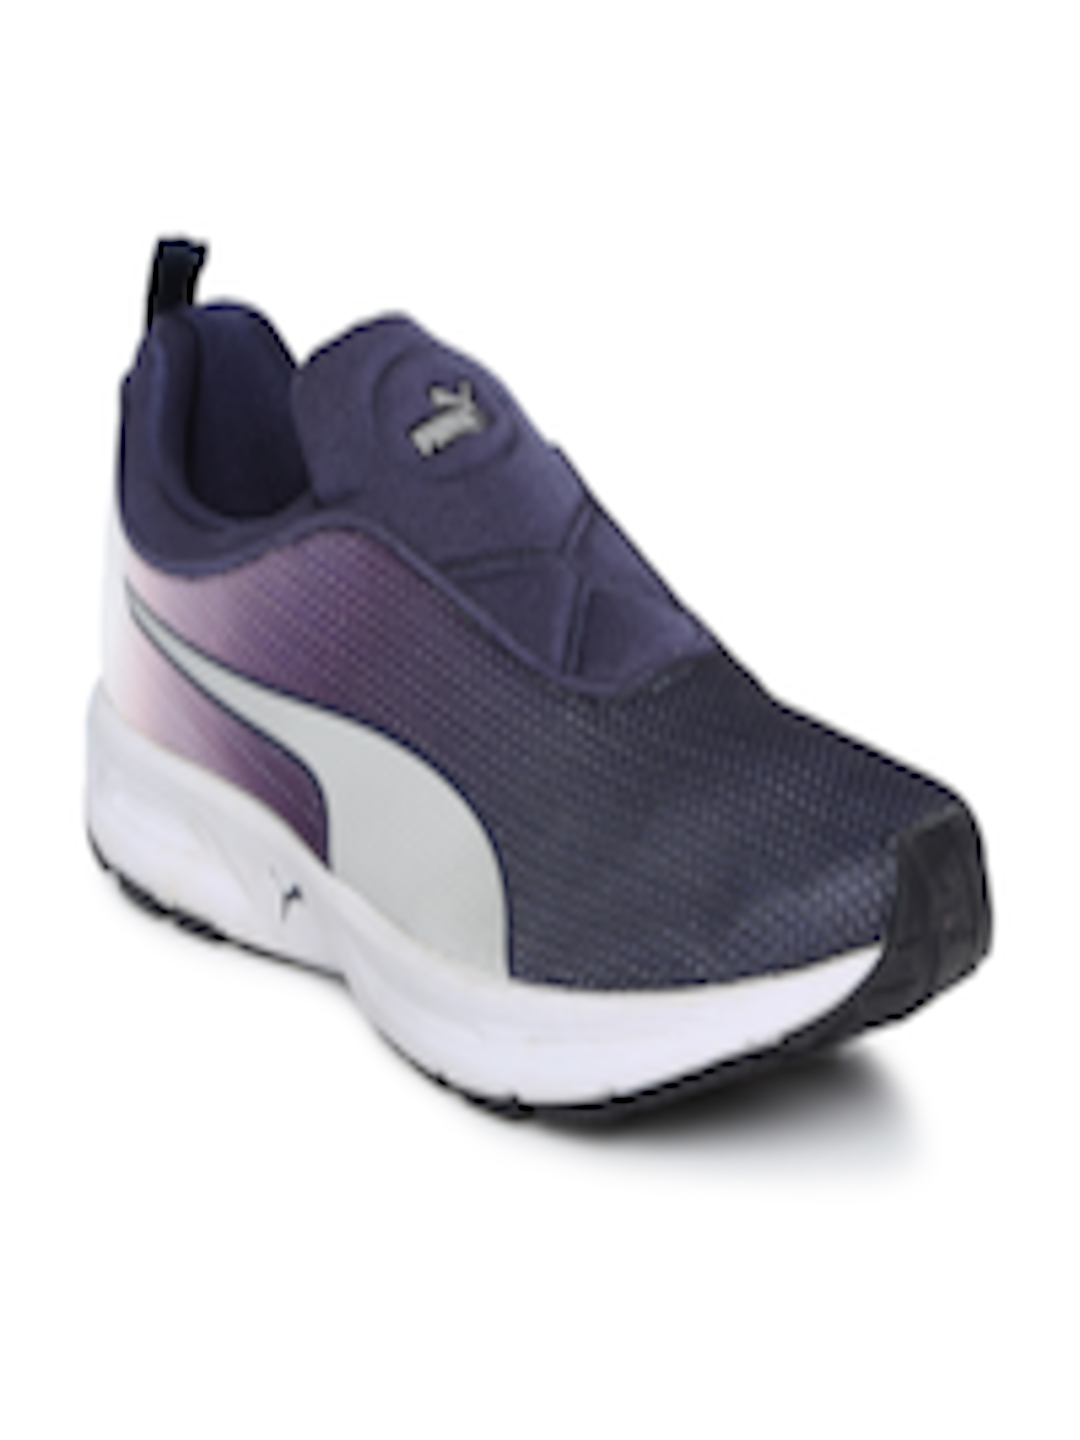 Buy Puma Men Purple Running Shoes - Sports Shoes for Men 8097713 | Myntra